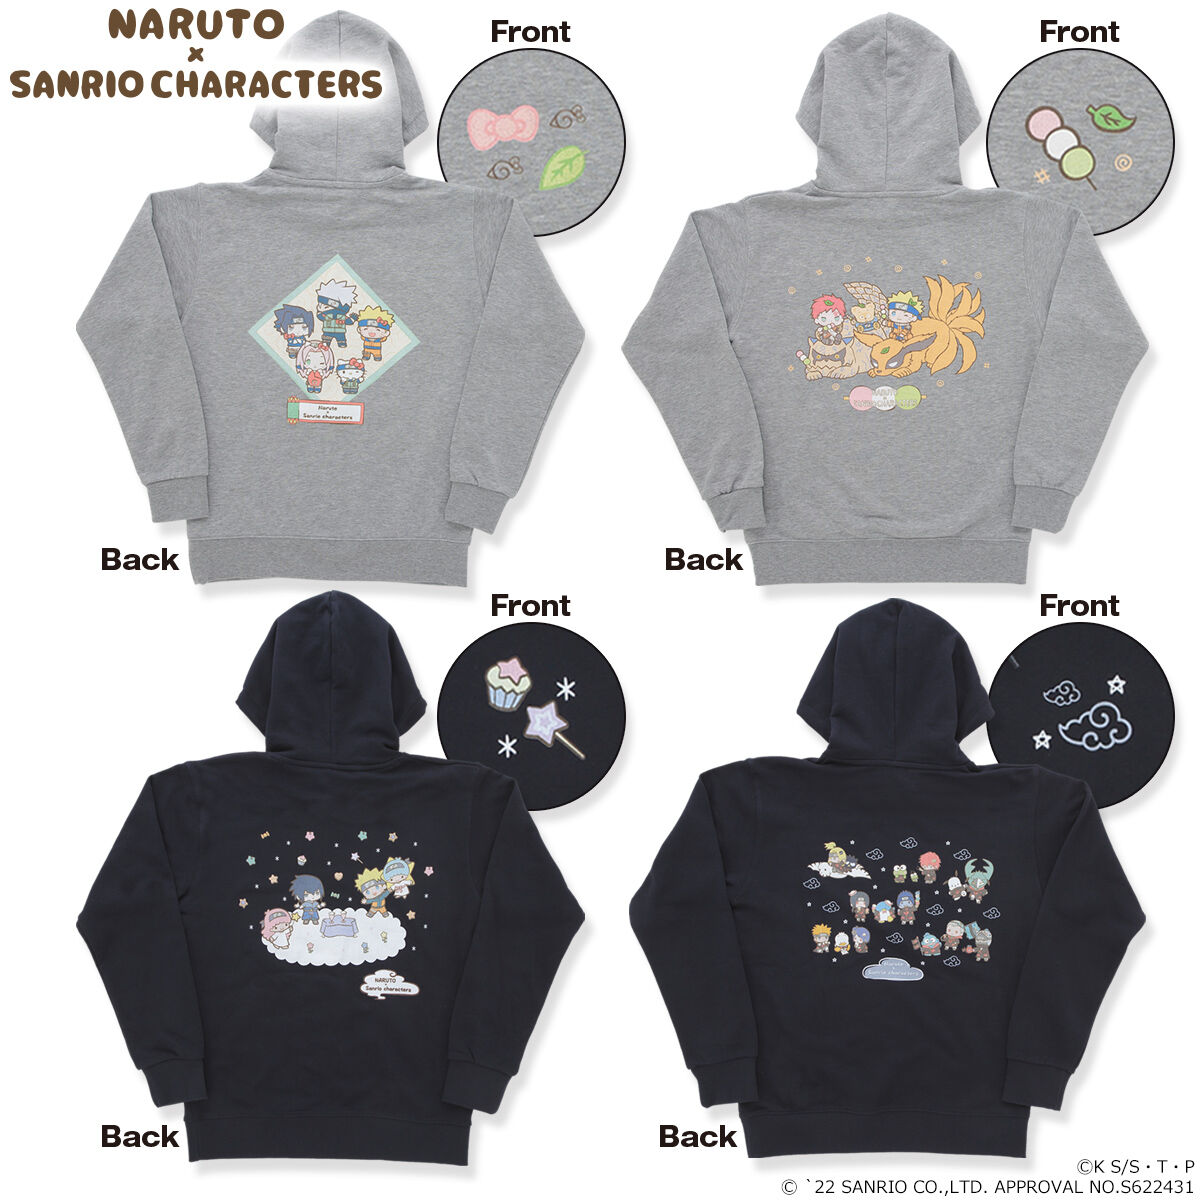 Find Your Cute Ninja Way in Naruto x Sanrio Collab Character Goods -  Crunchyroll News